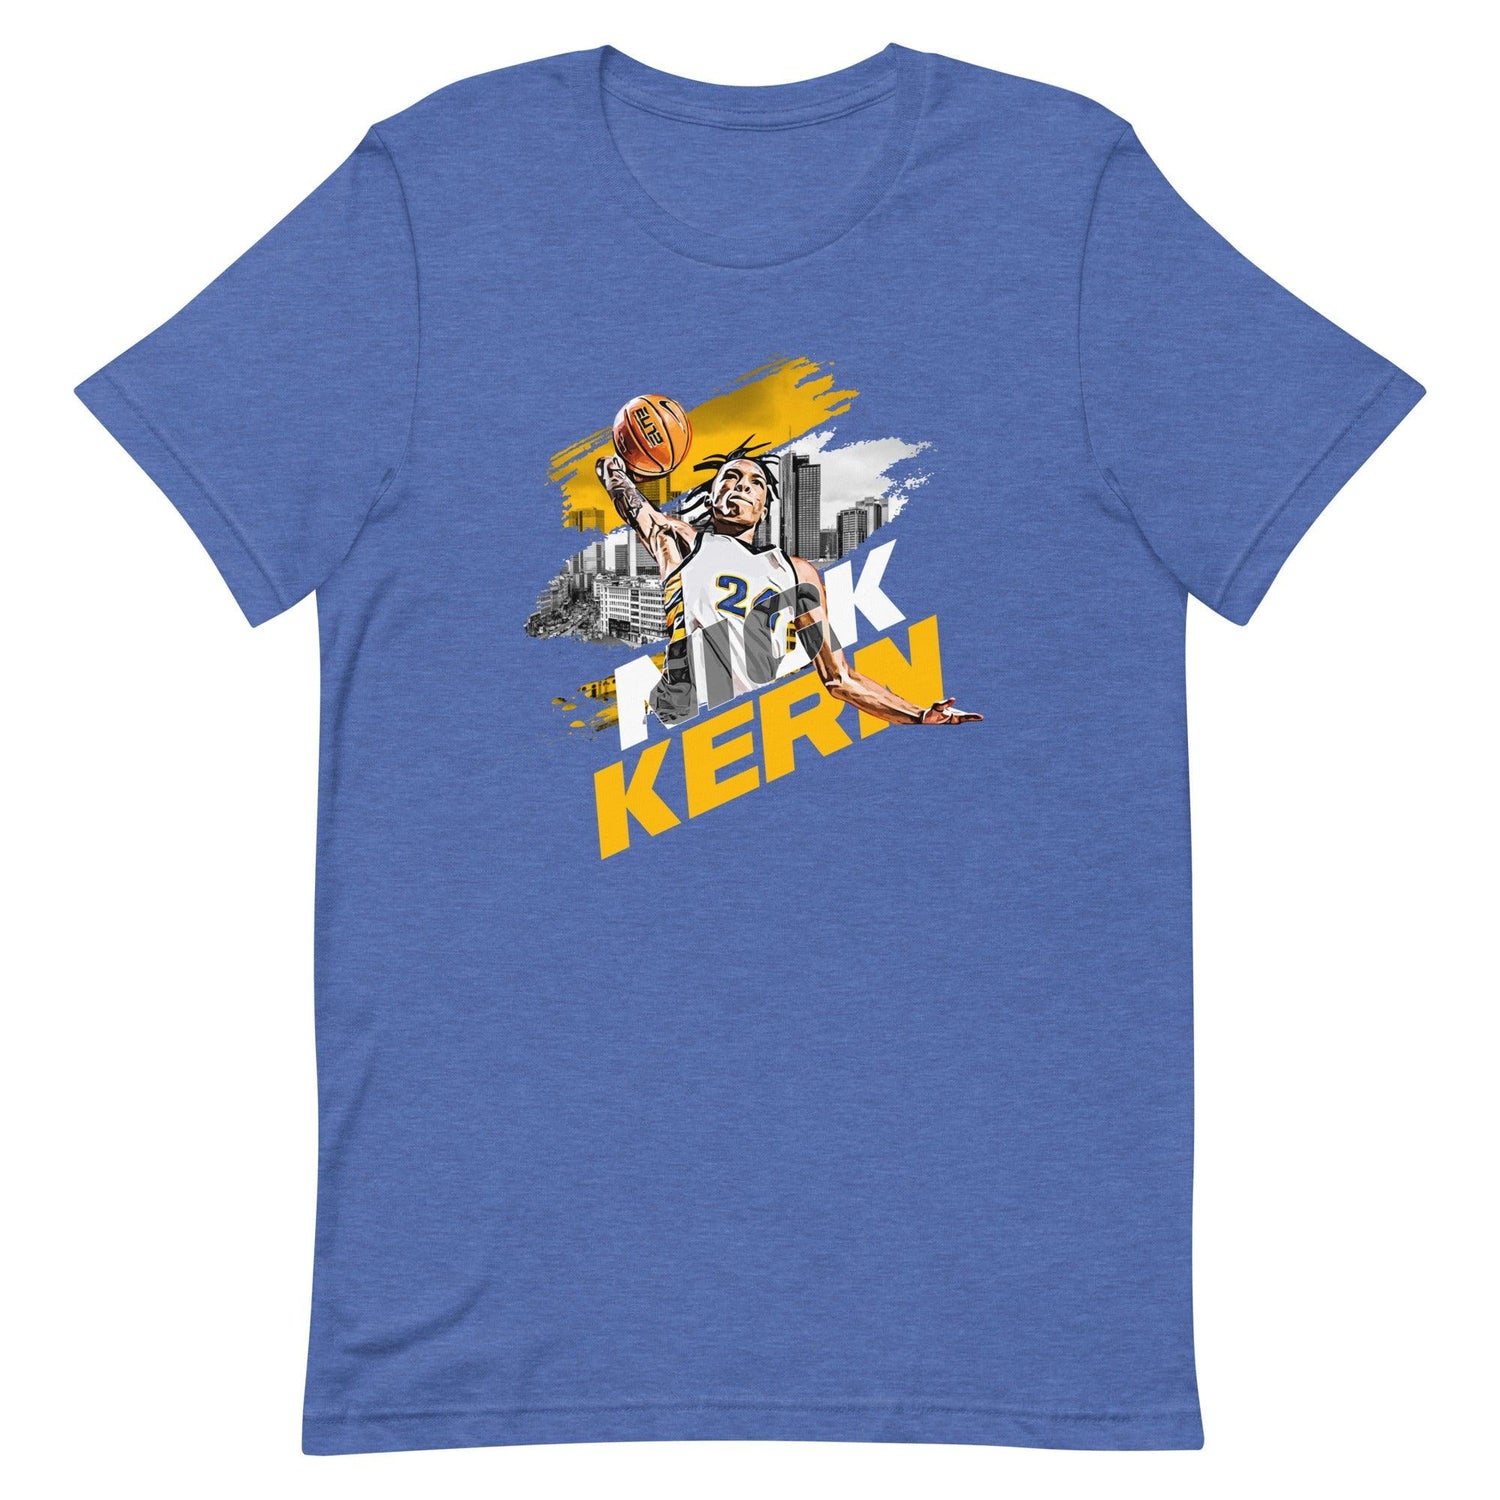 Nick Kern "Gameday" t-shirt - Fan Arch